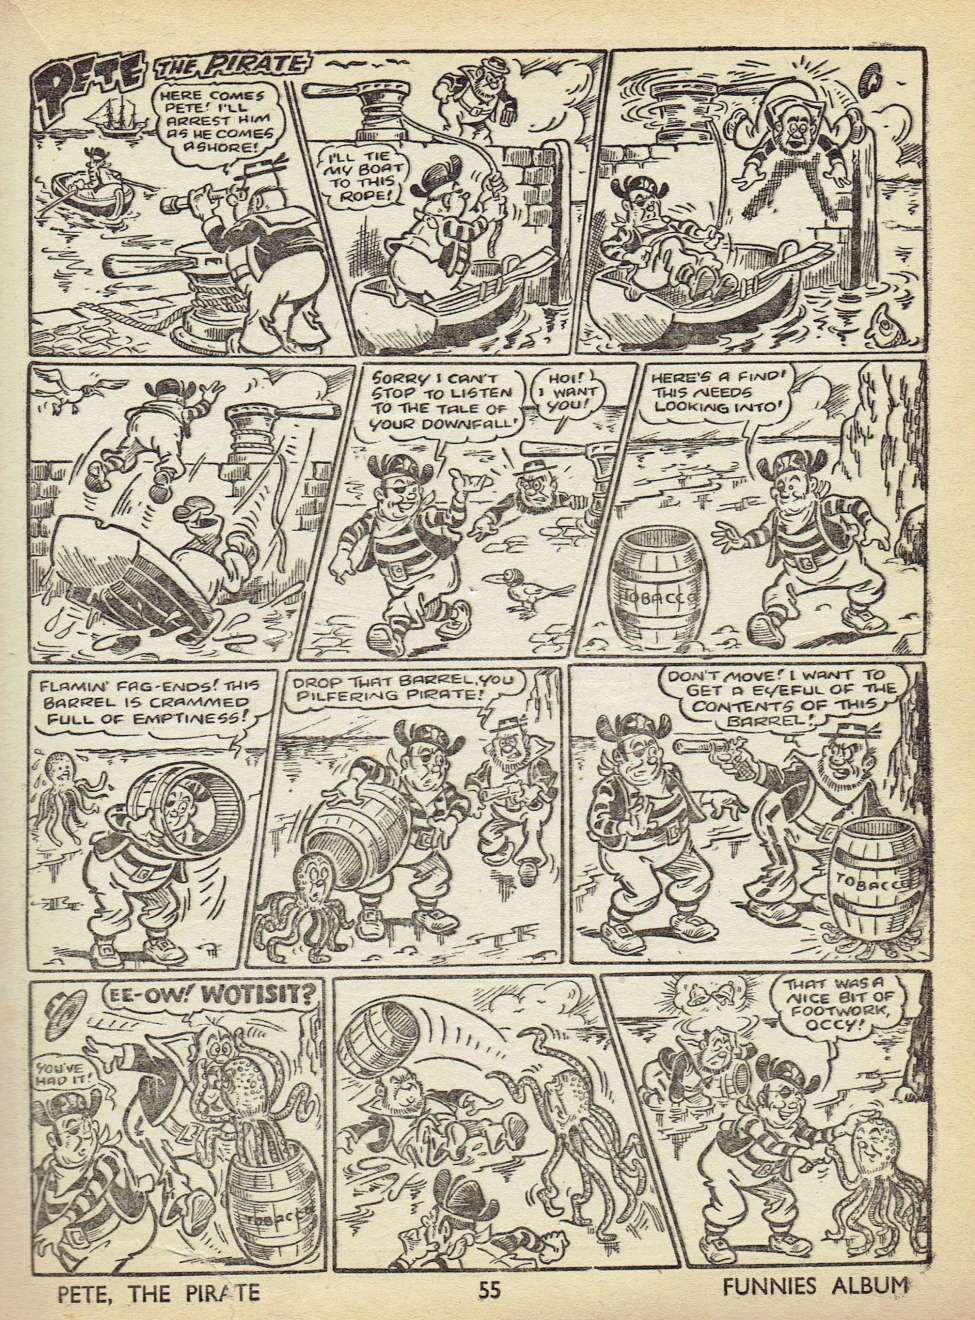 Comic Book Cover For Funnies Album 1953 Part 2 - Version 2